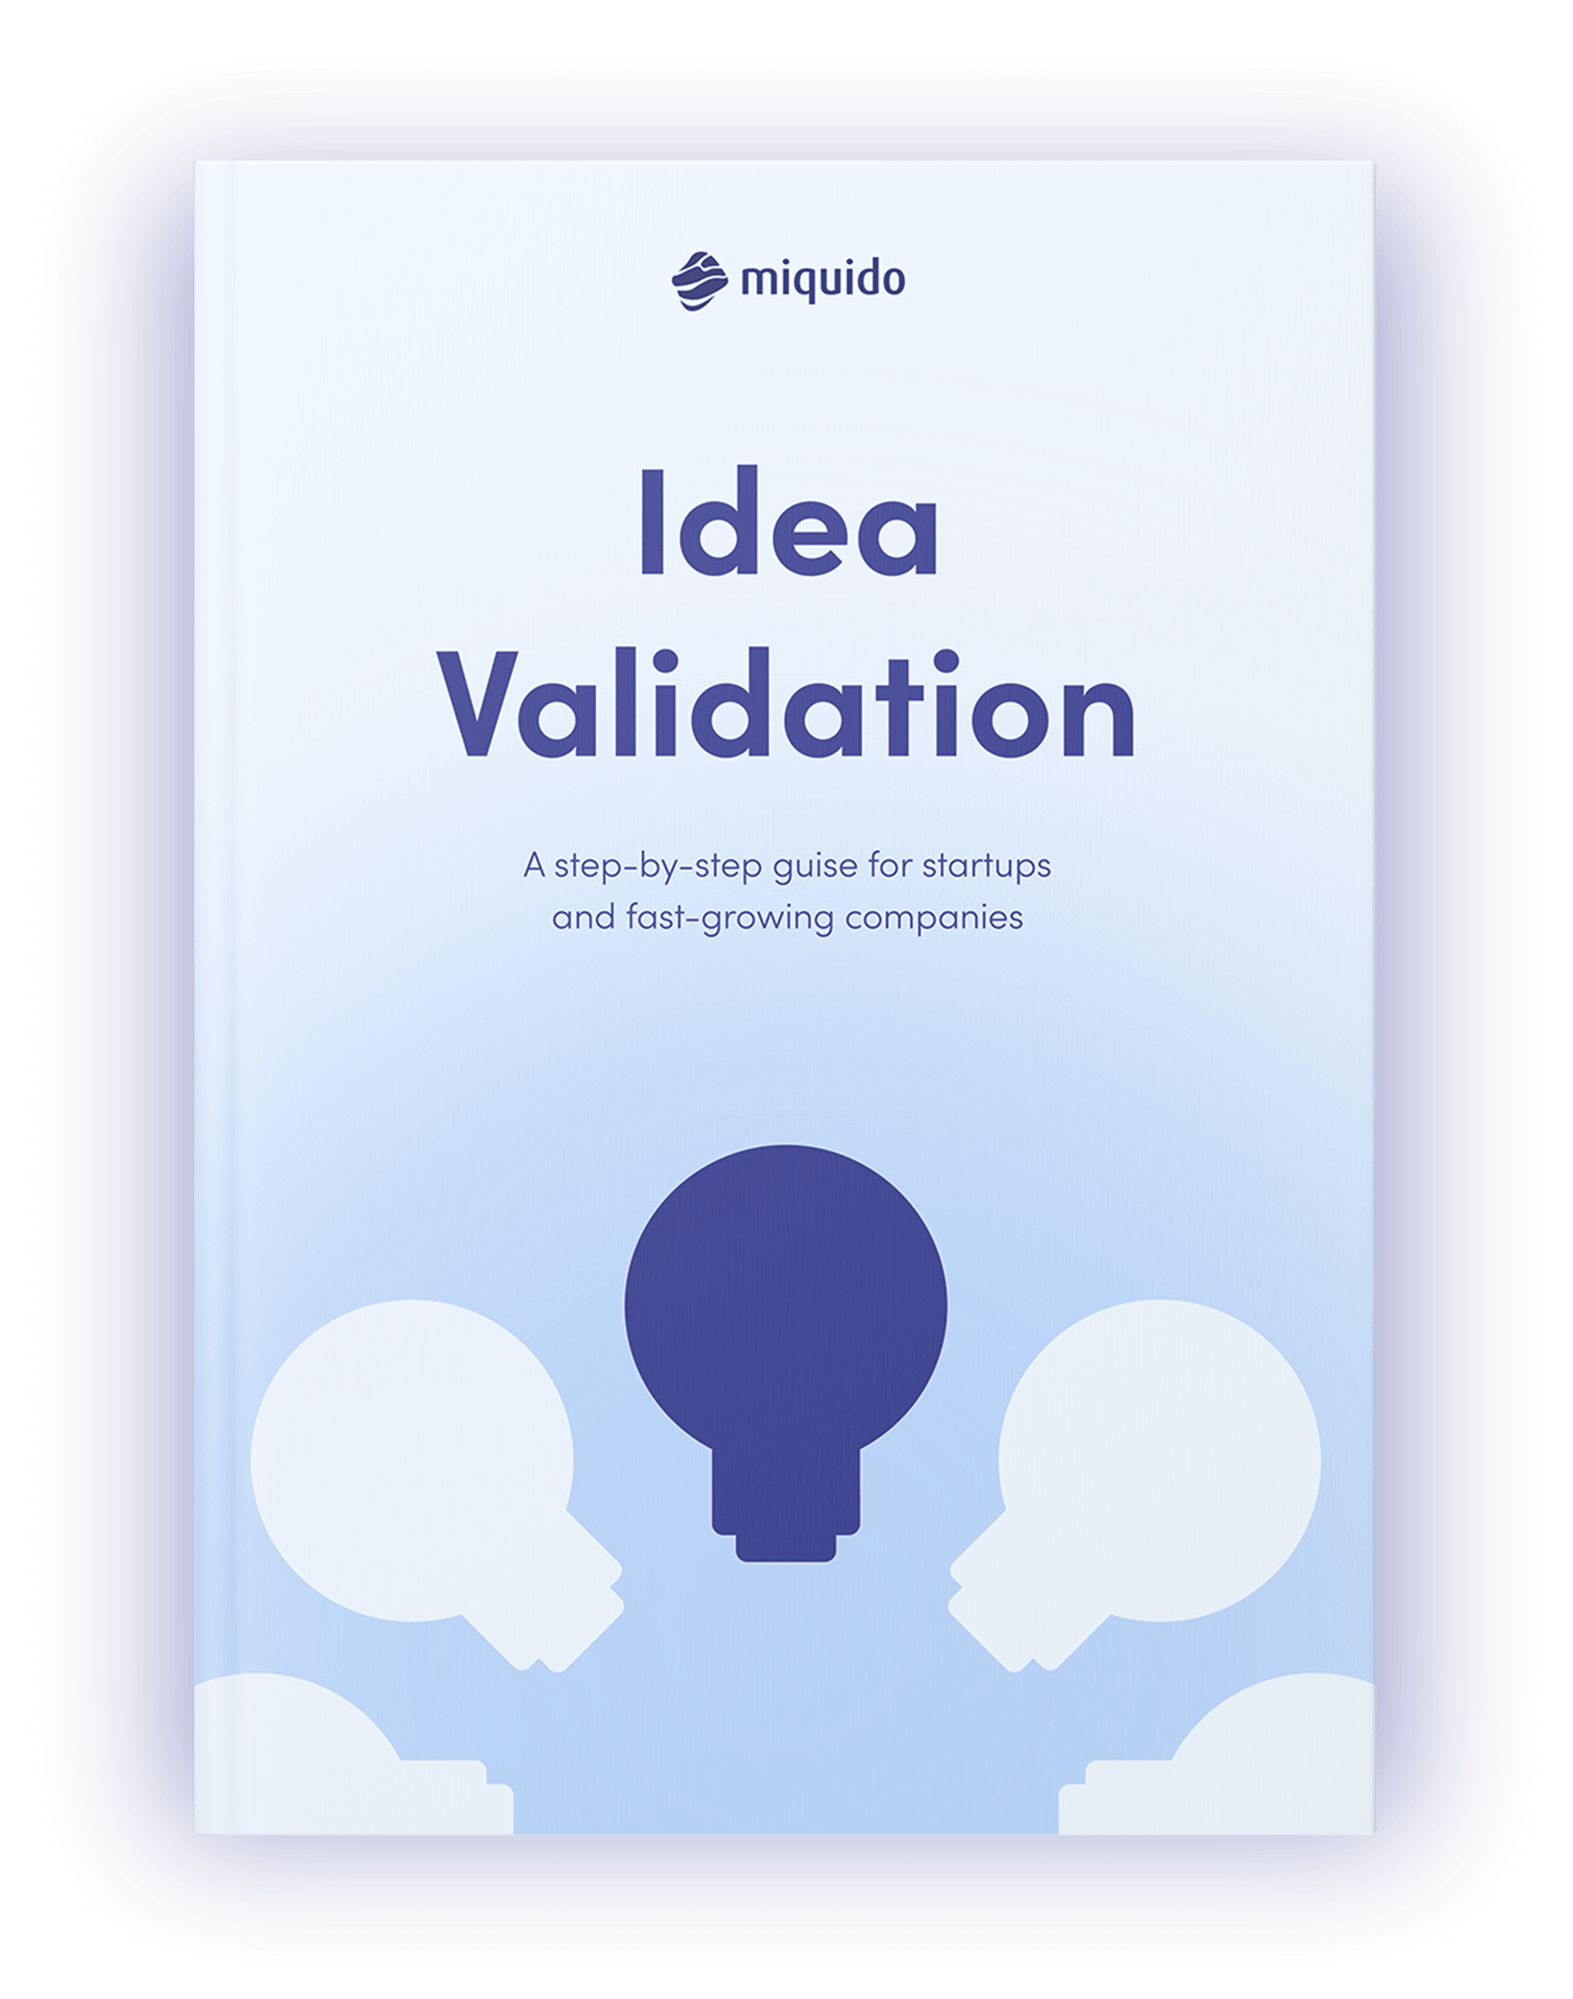 Idea Validation – Shadow book cover mockup (1)